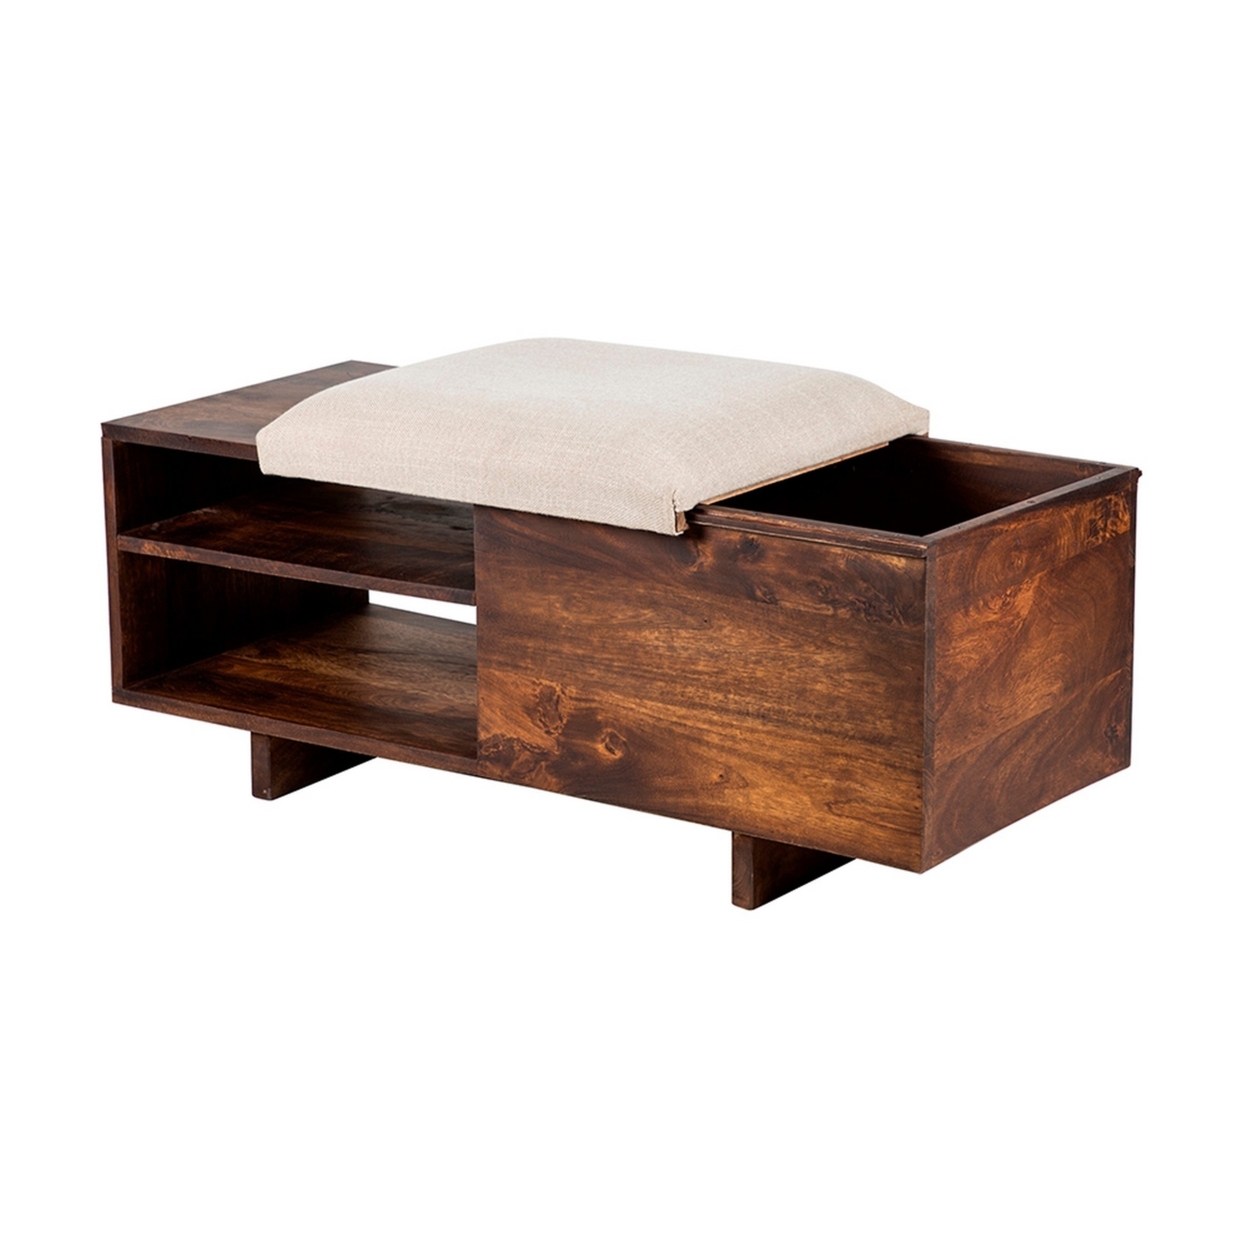 40 Inch Accent Storage Bench, Sliding Cushion Top, Modern, Brown Wood, Saltoro Sherpi